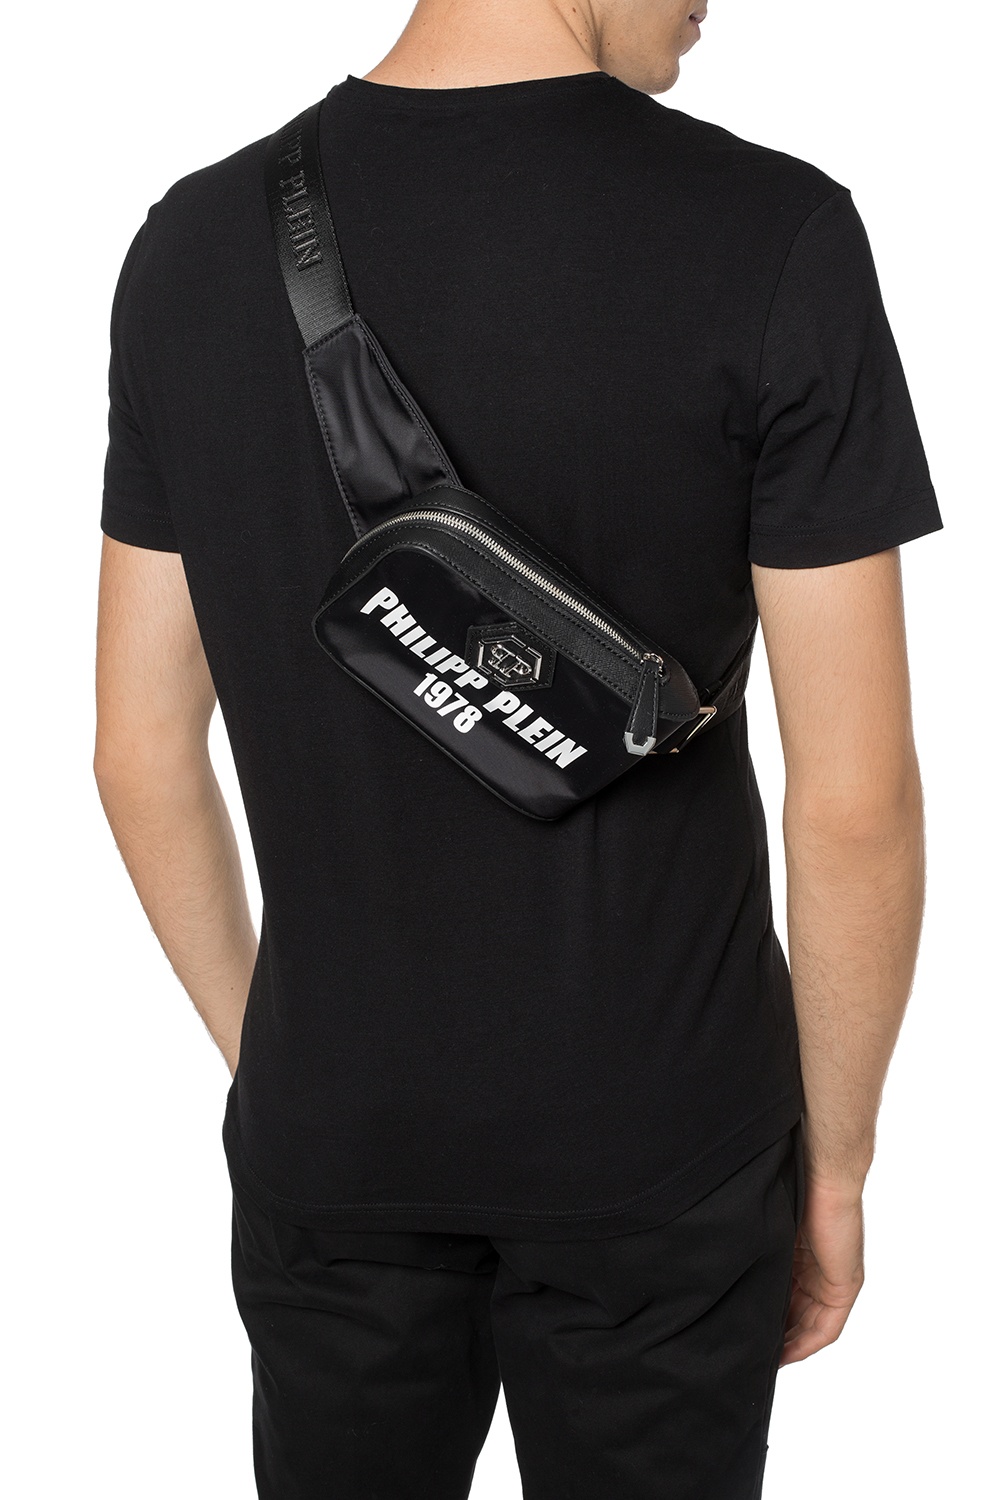 Groove' belt bag with logo Philipp 